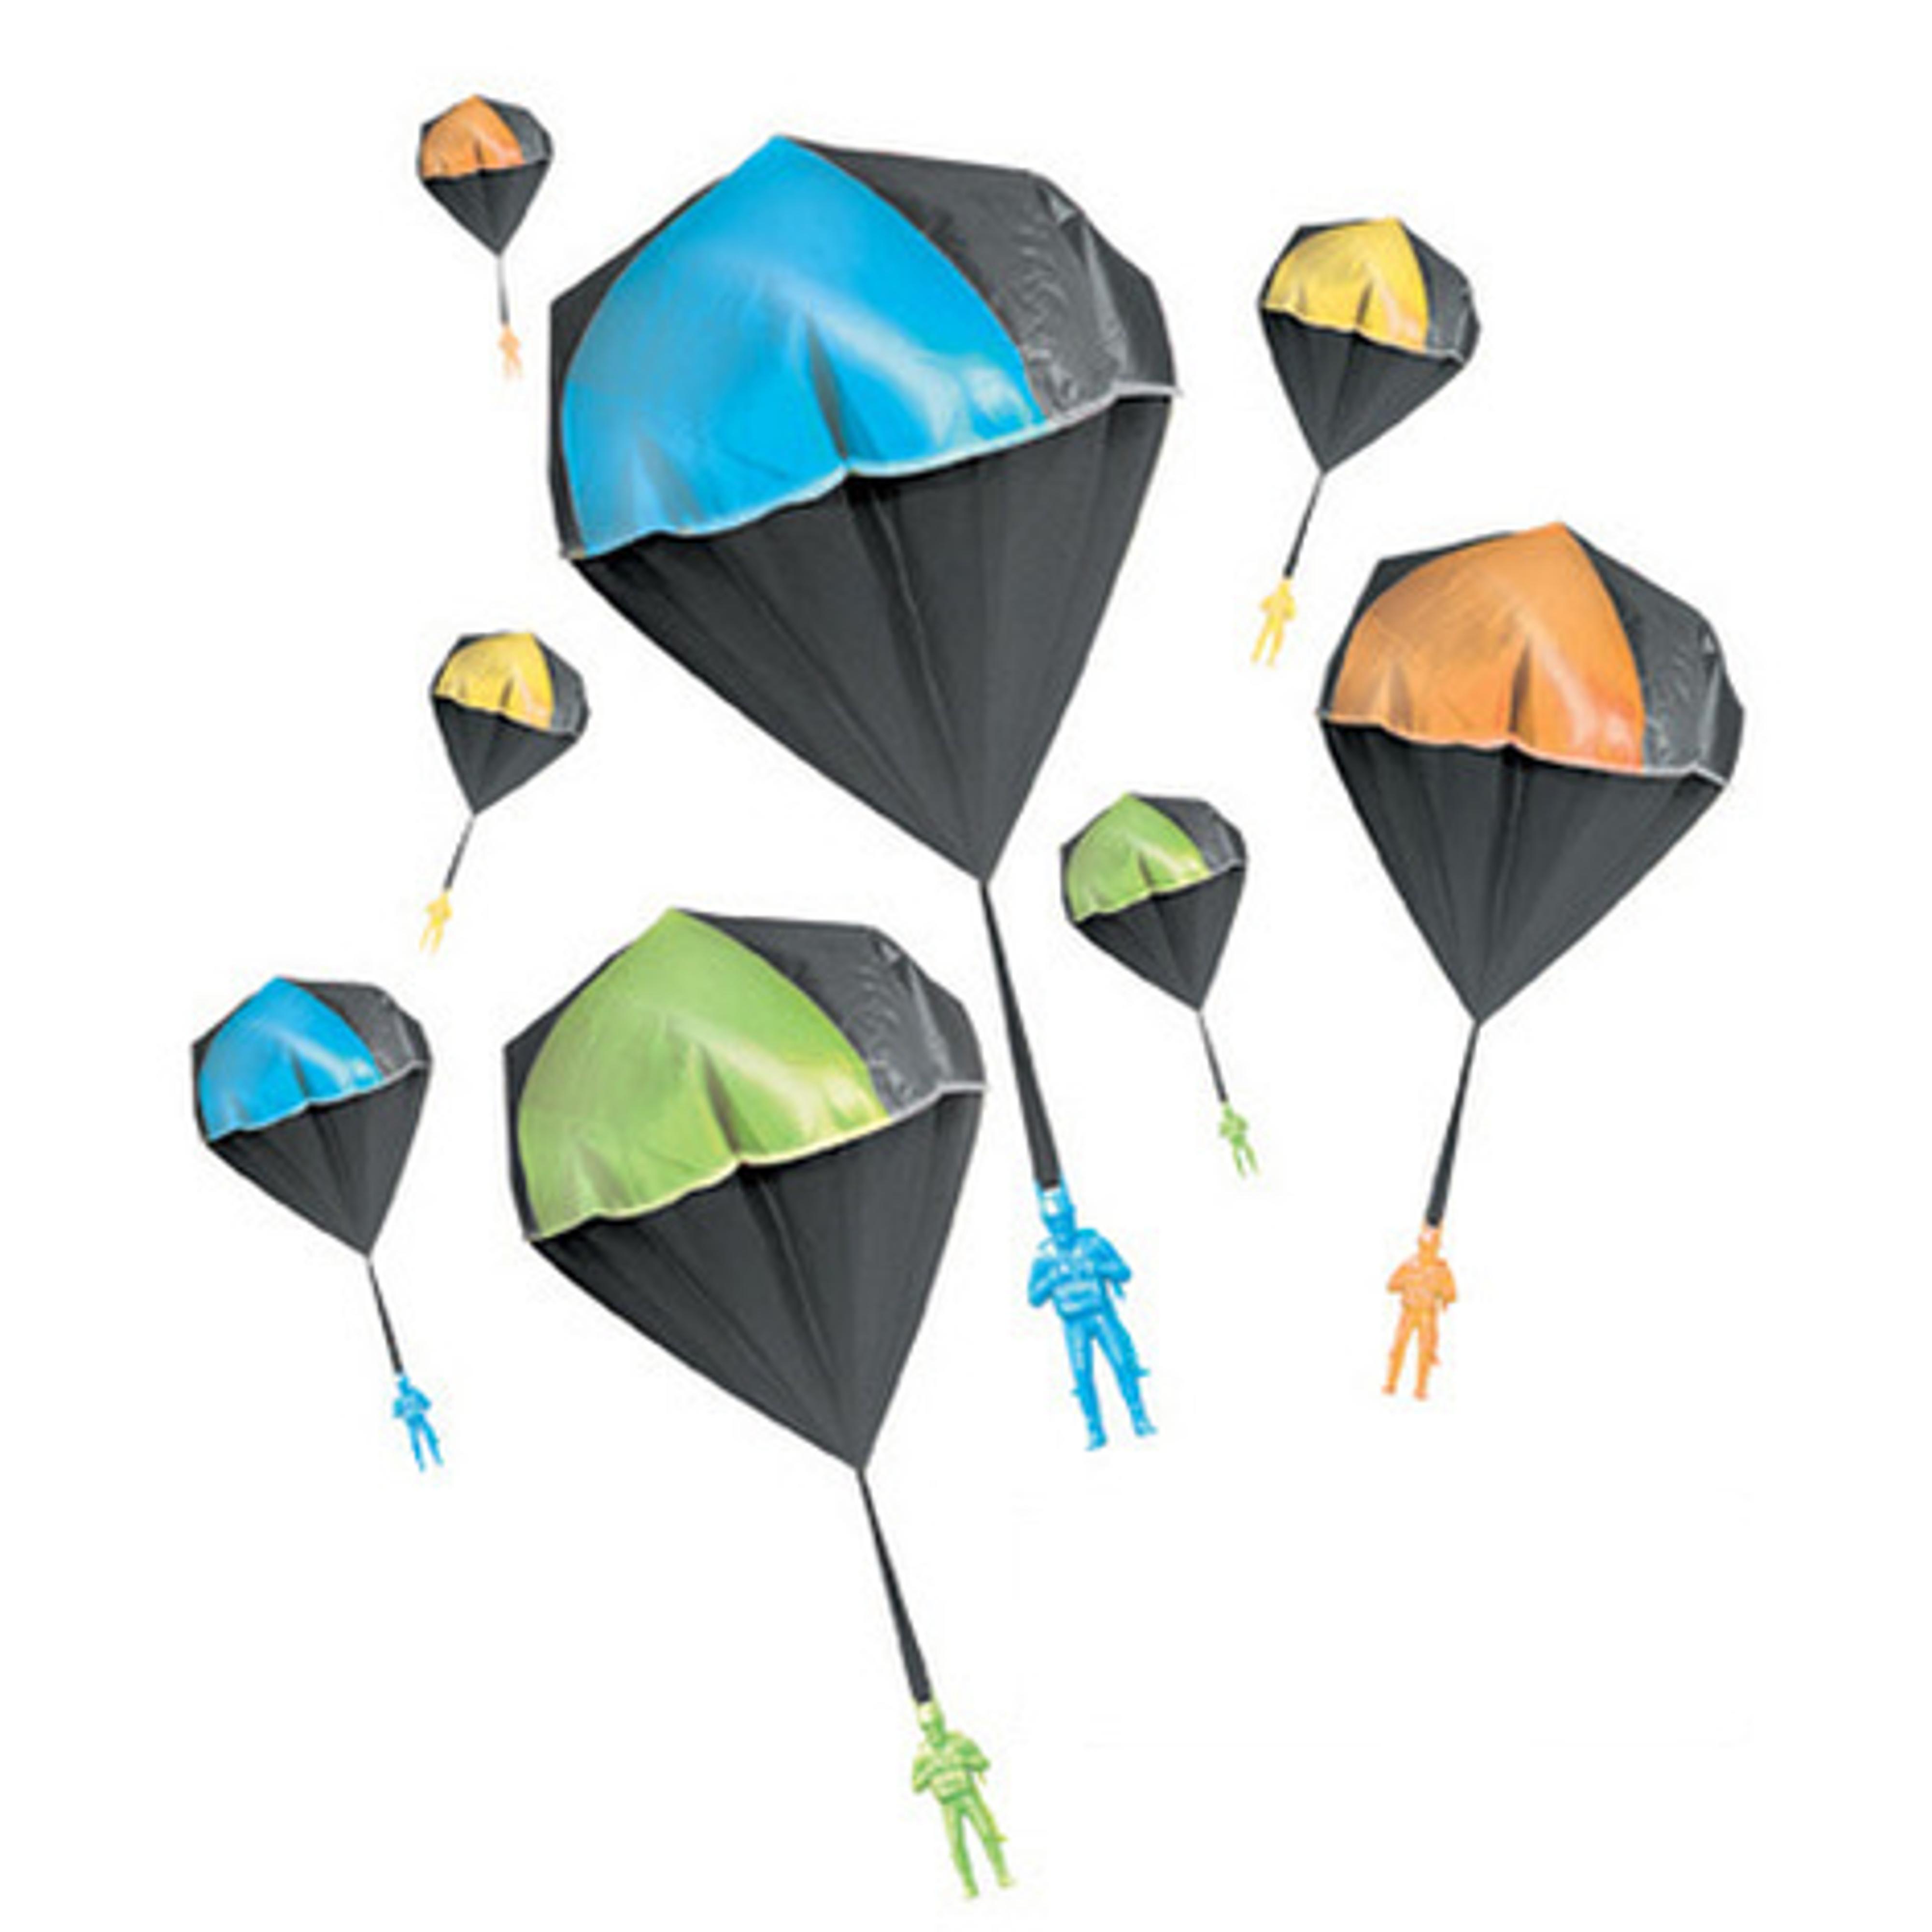 AeroMax Toys Tangle Free Toy Parachute - Glow In The Dark